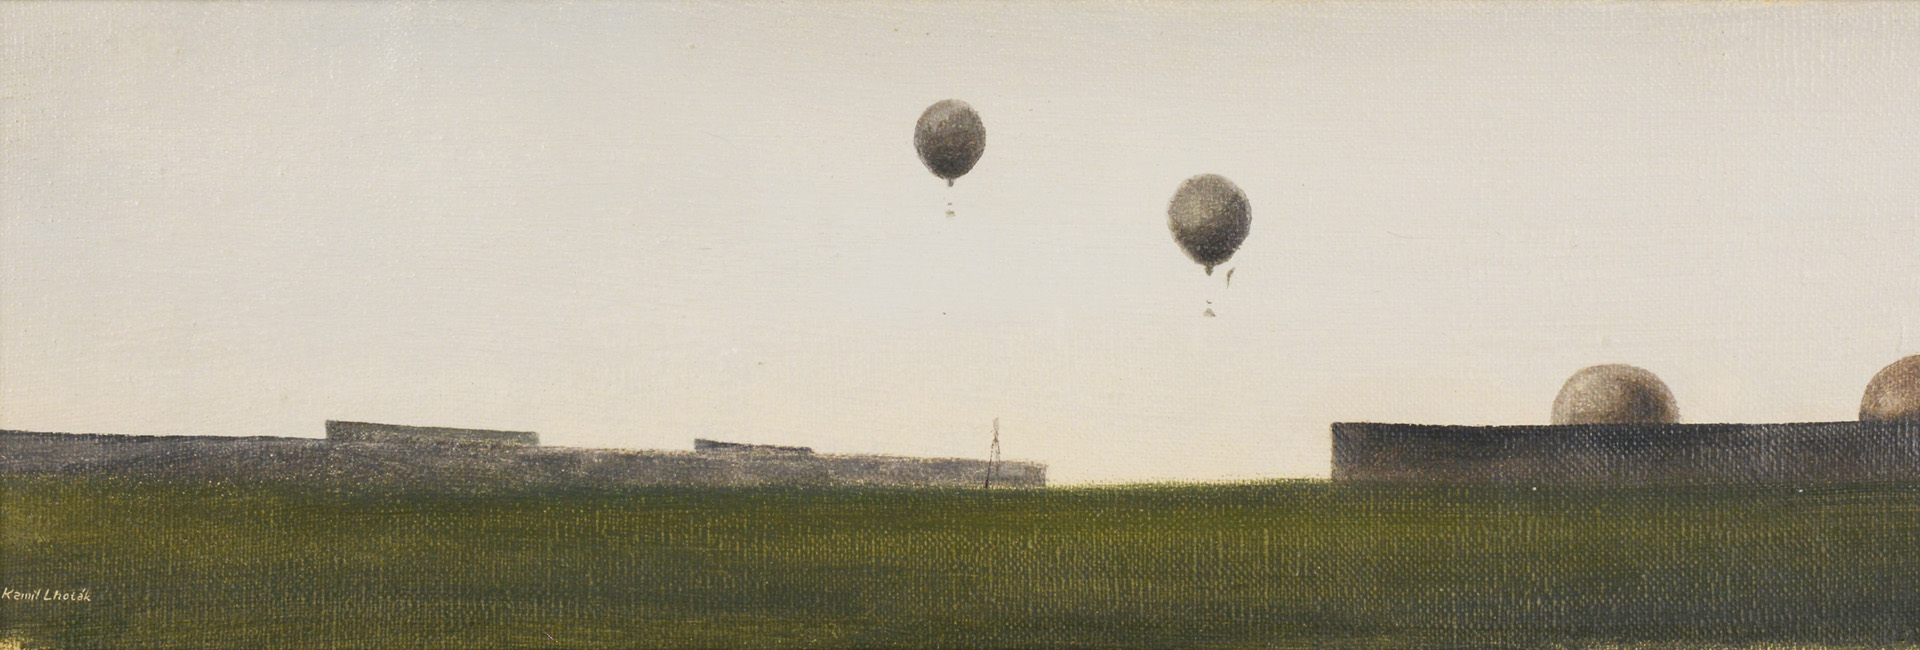 Hot air balloon races, 1942 | Sold for 1.620.000 CZK | Lot. nr. 182 [Kamil Lhoták (1912 - 1990)]